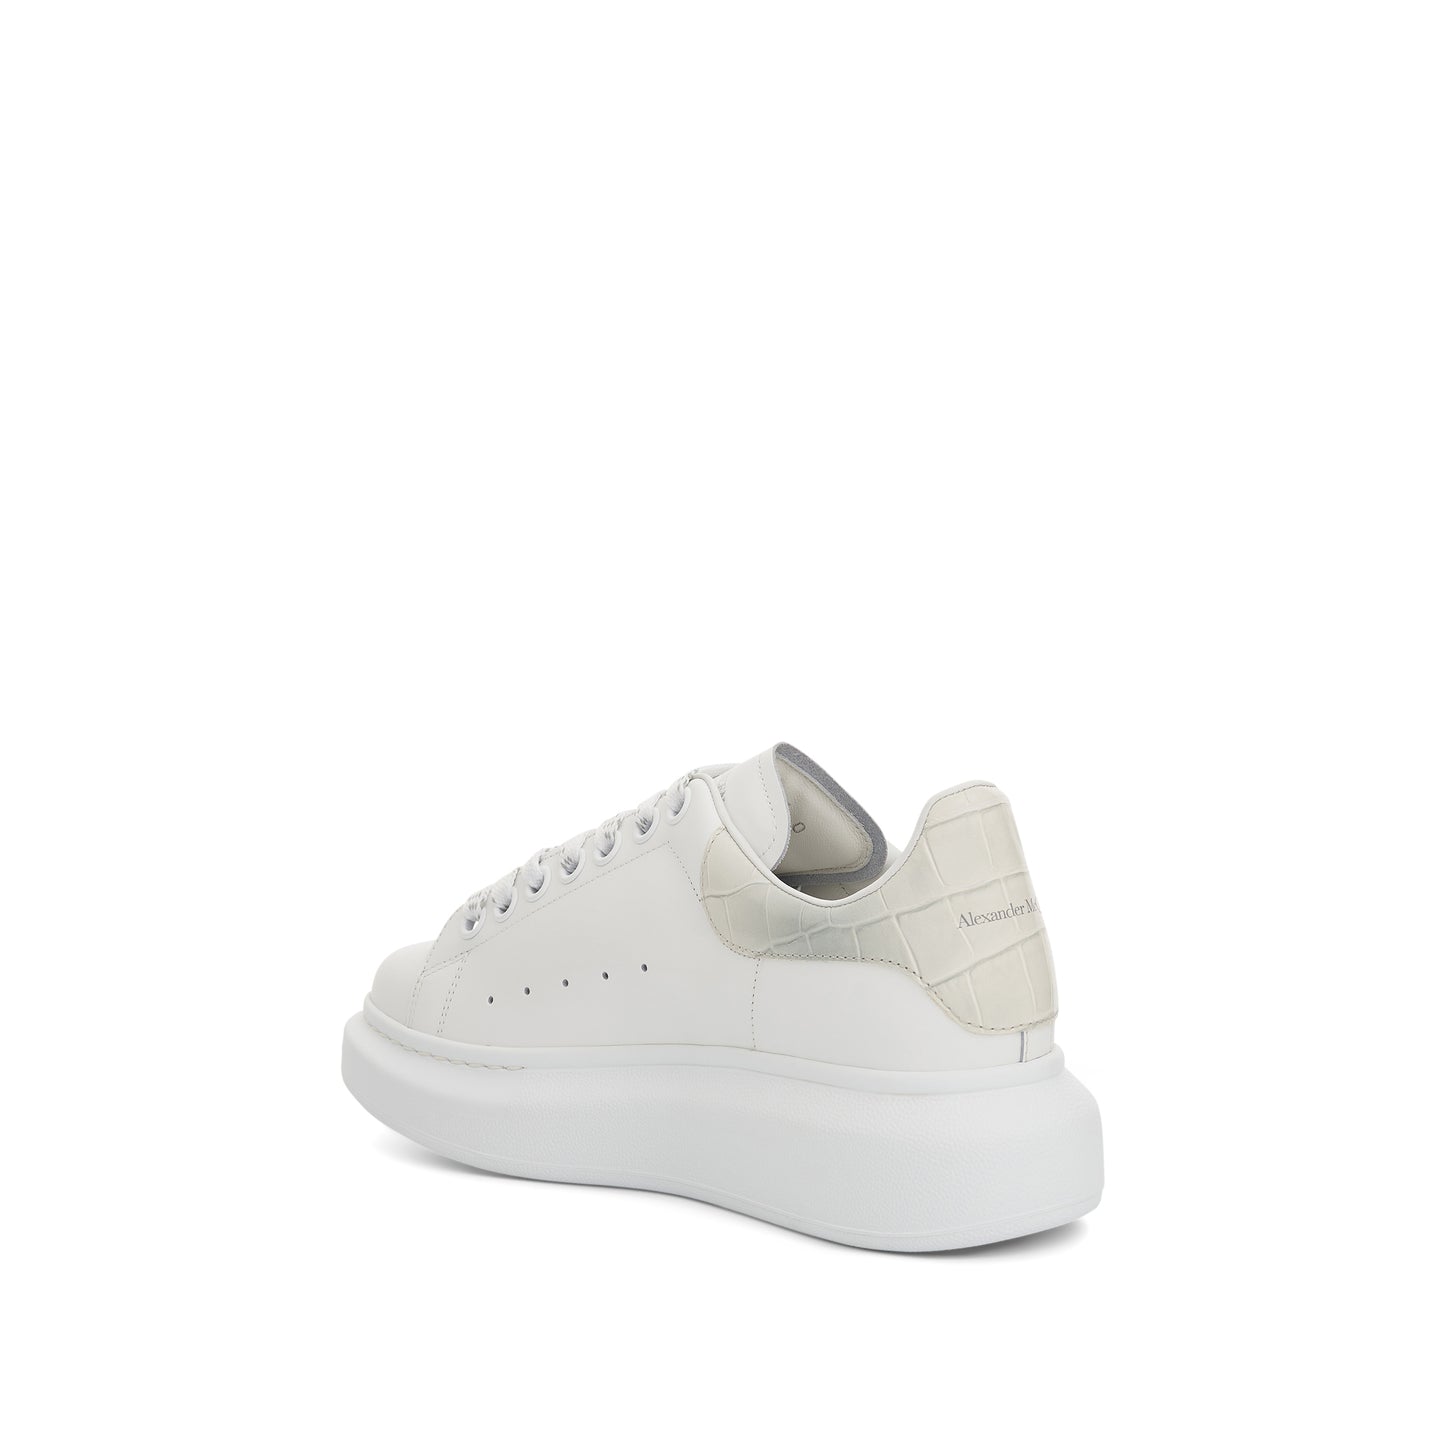 Larry Oversized Sneaker in White/Hawthorn